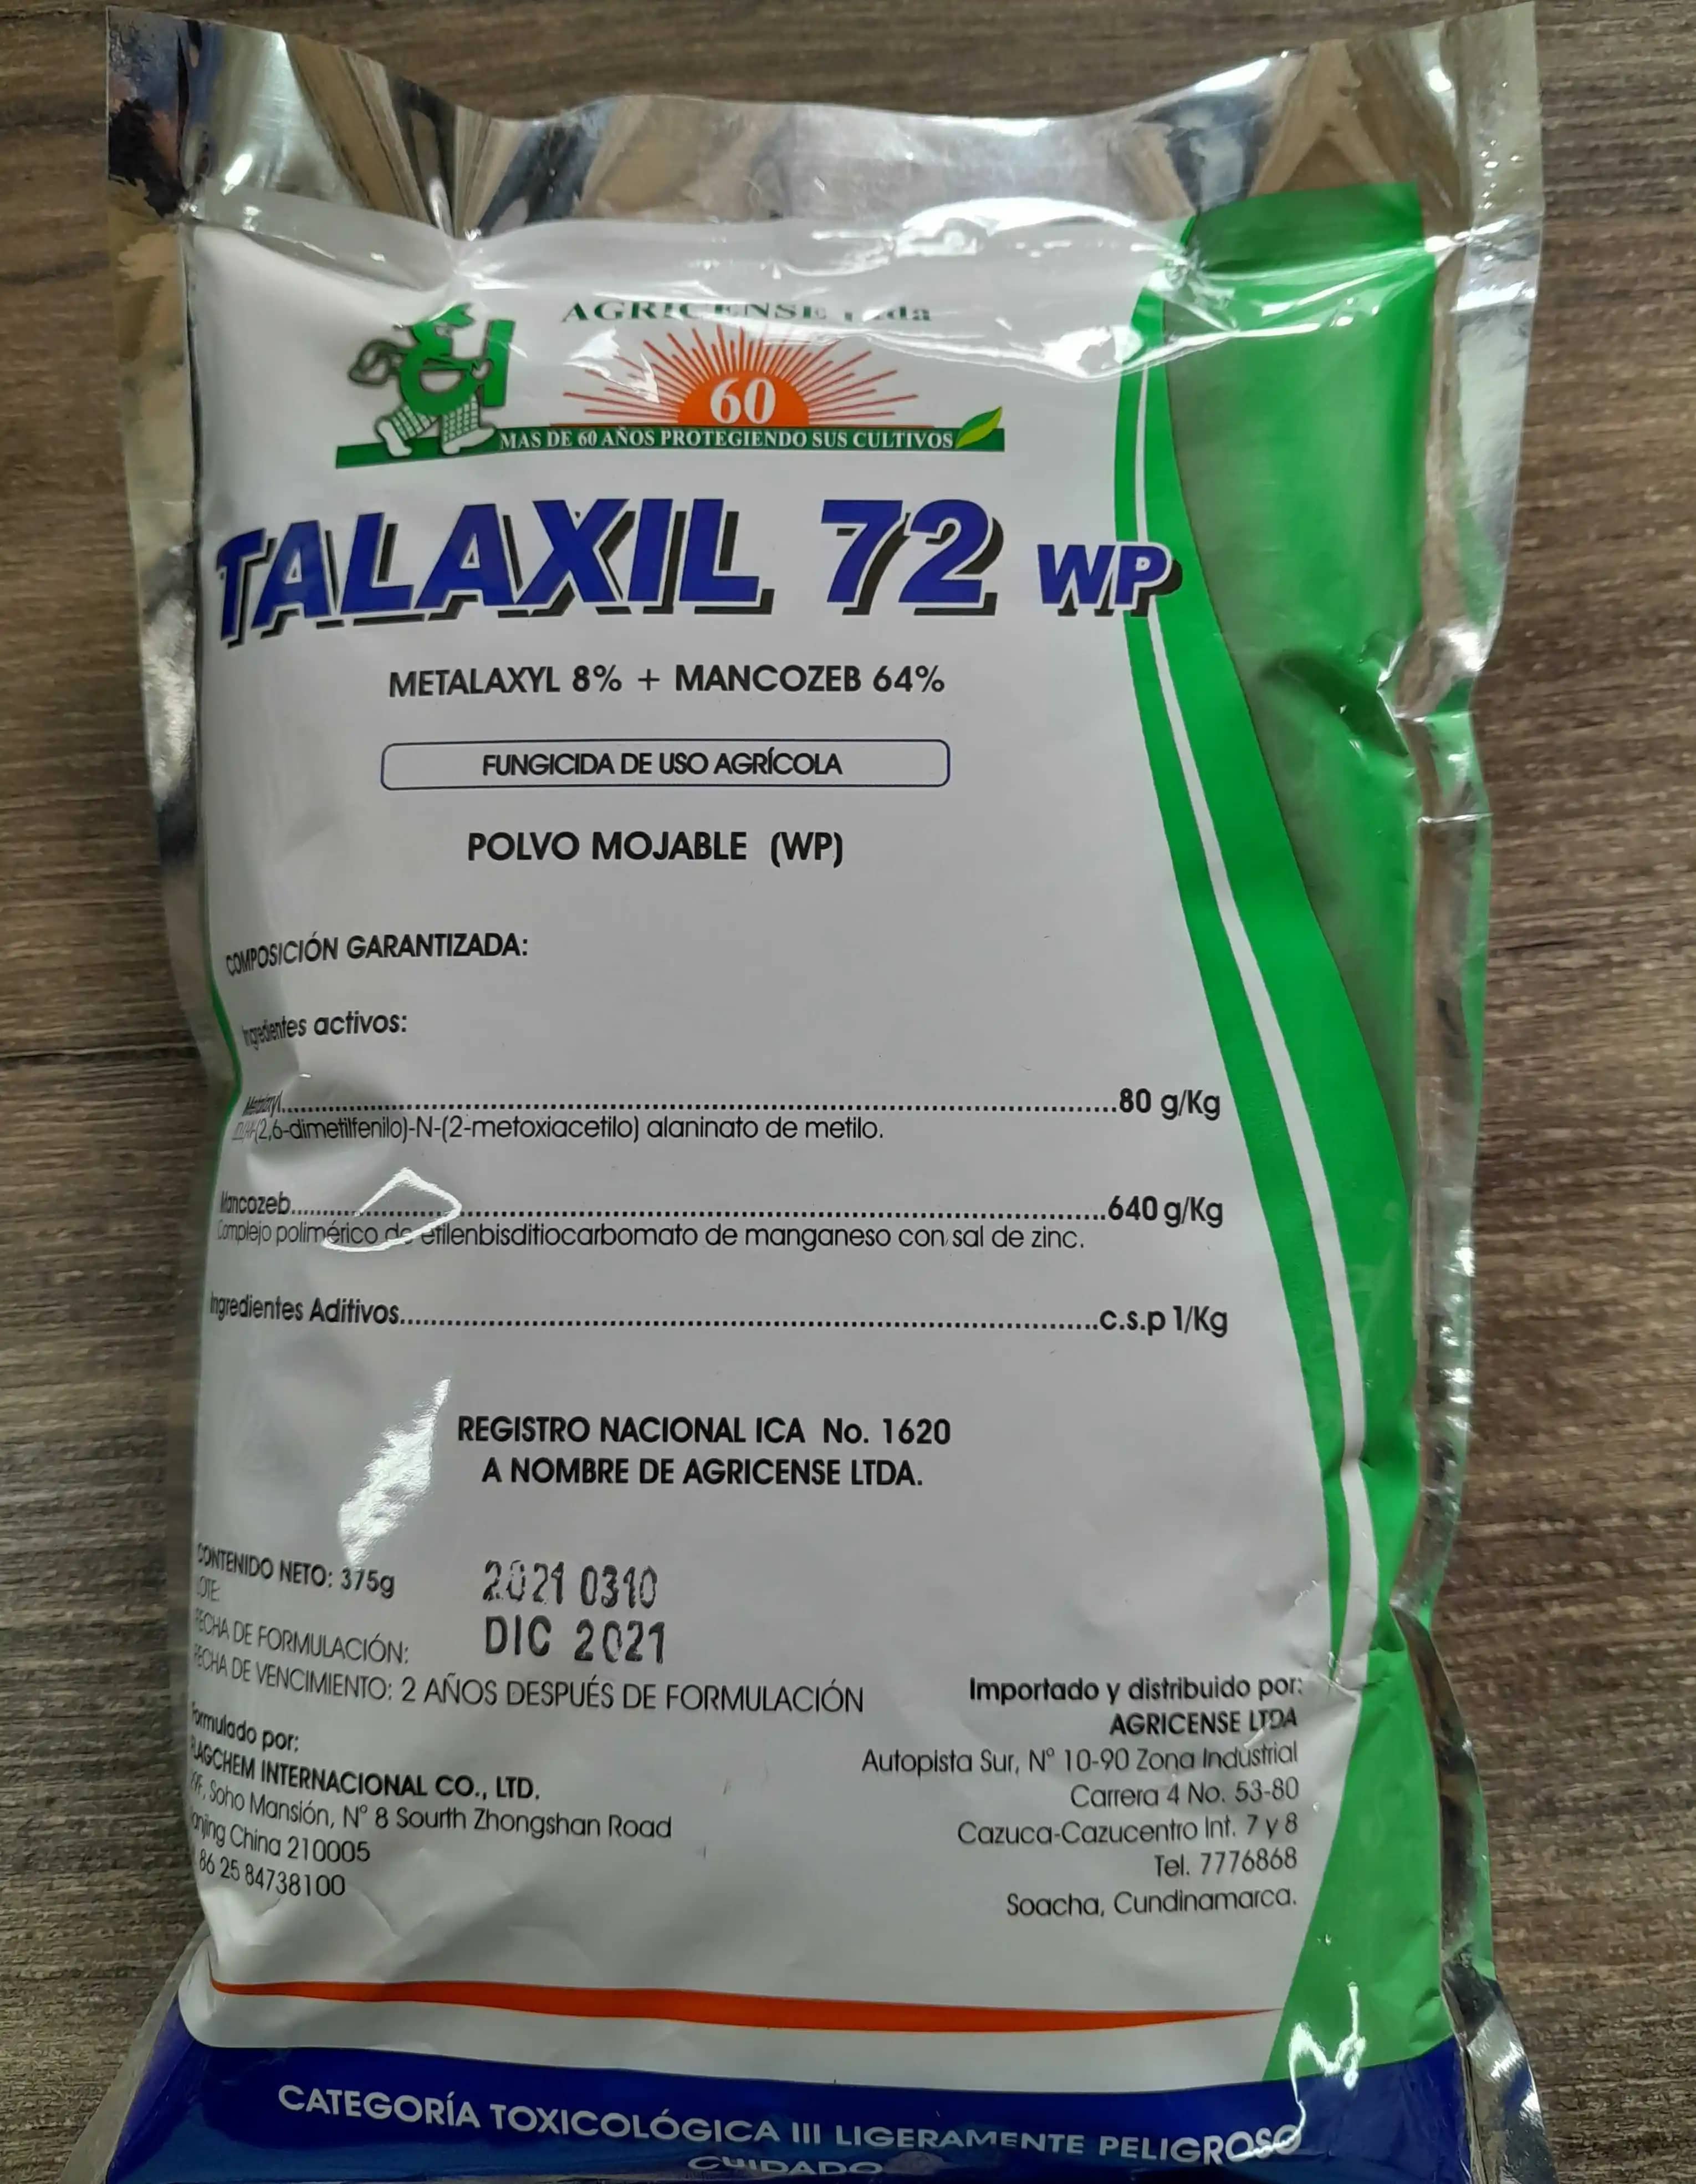 Talaxil 72 WP Fungicida protección curativo